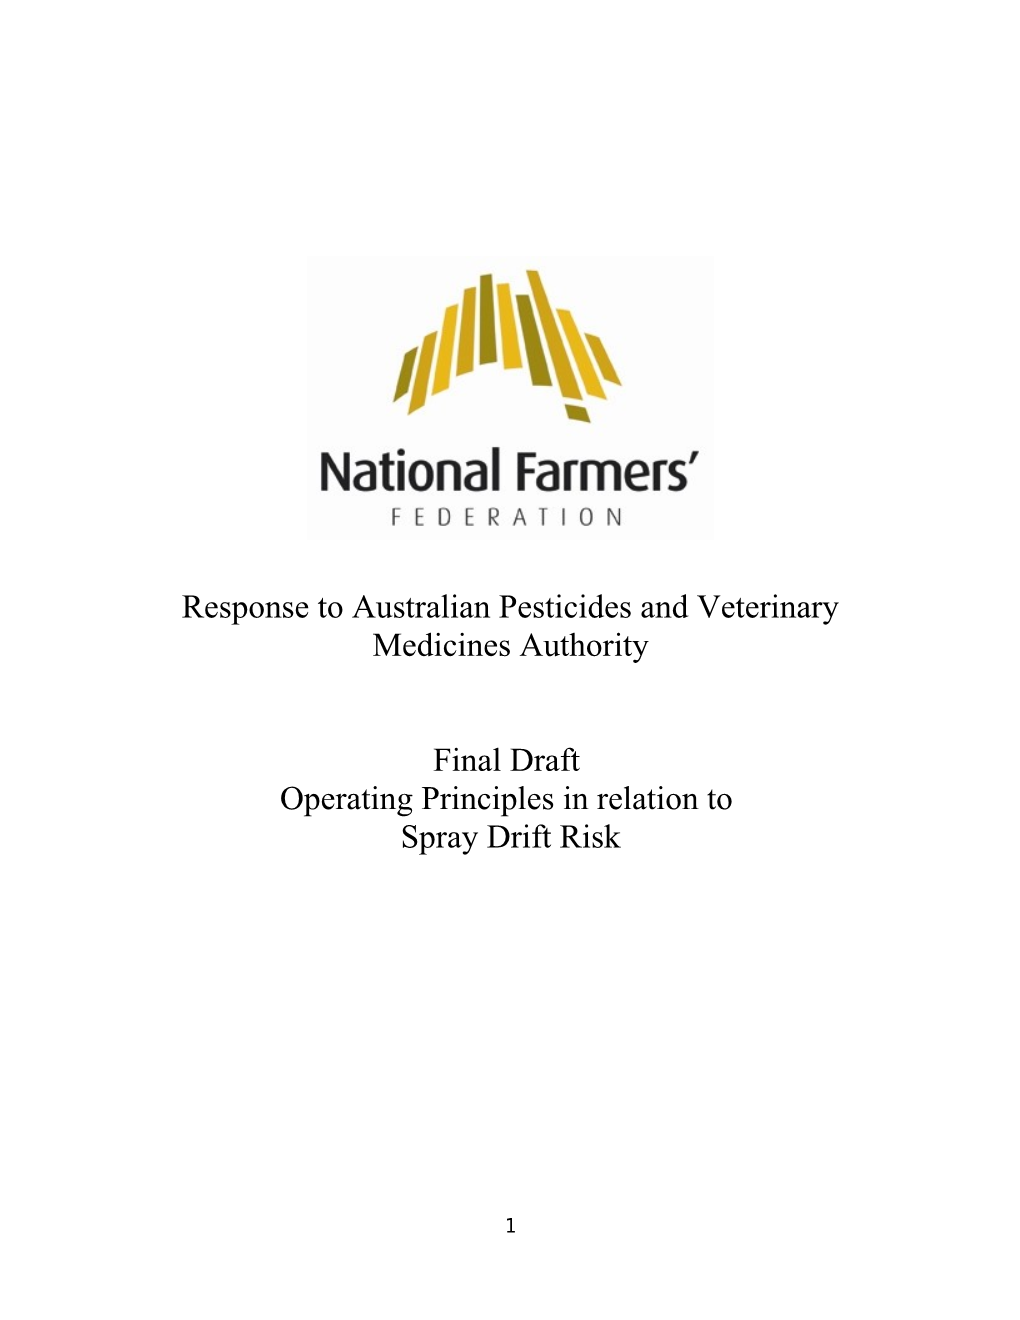 Response to Australian Pesticides and Veterinary Medicines Authority